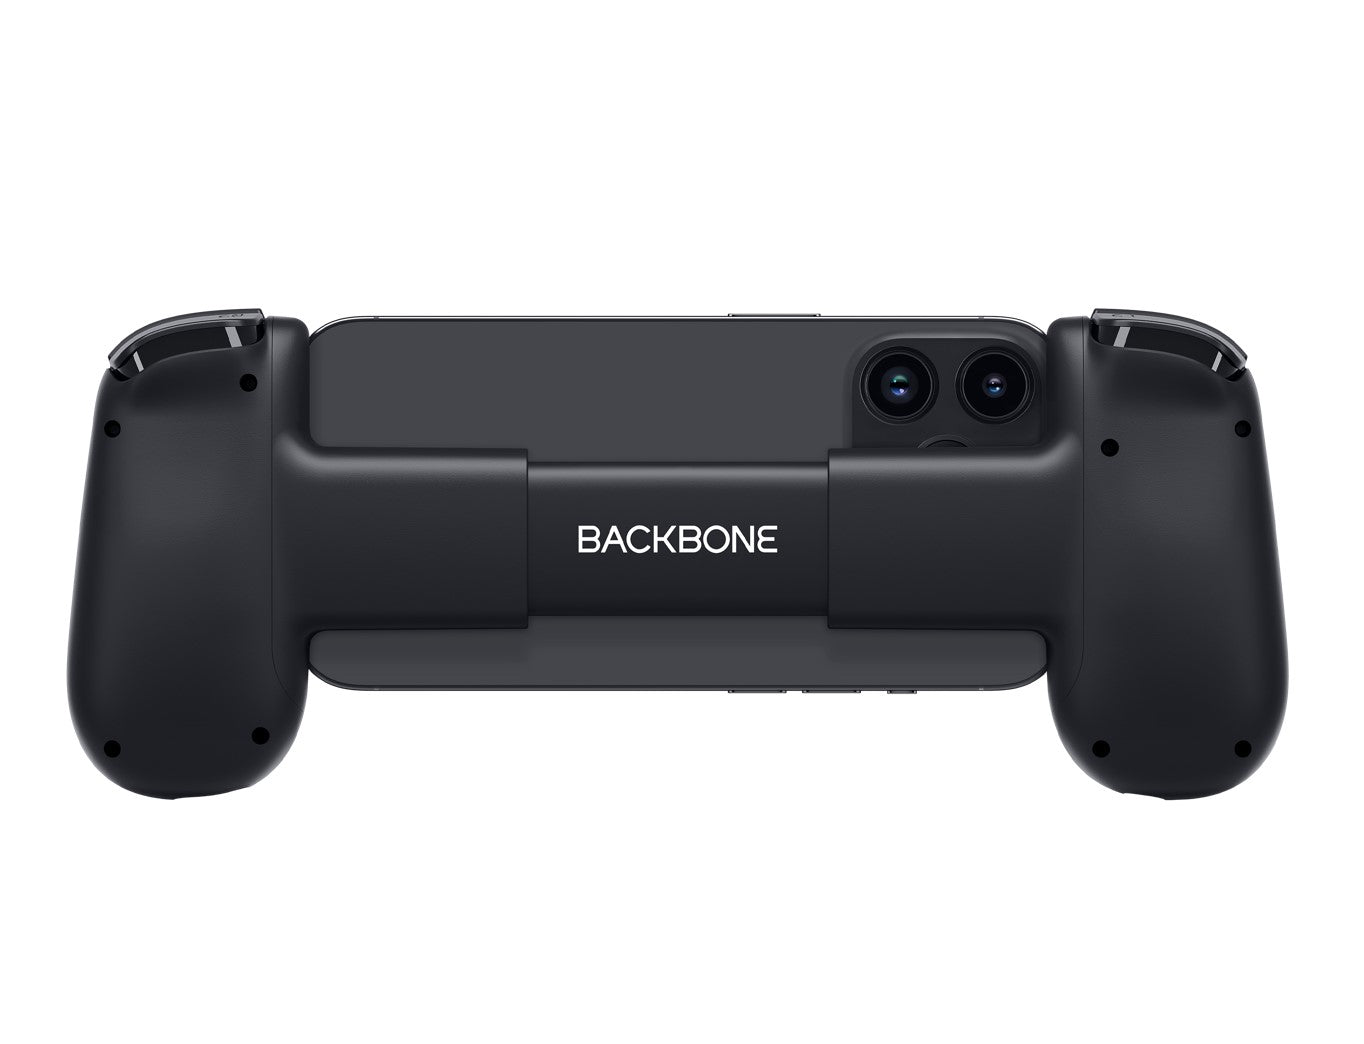 Backbone BB-02-B-R-B One Lightning Mobile Gaming Controller for iPhone, Black - Certified Refurbished